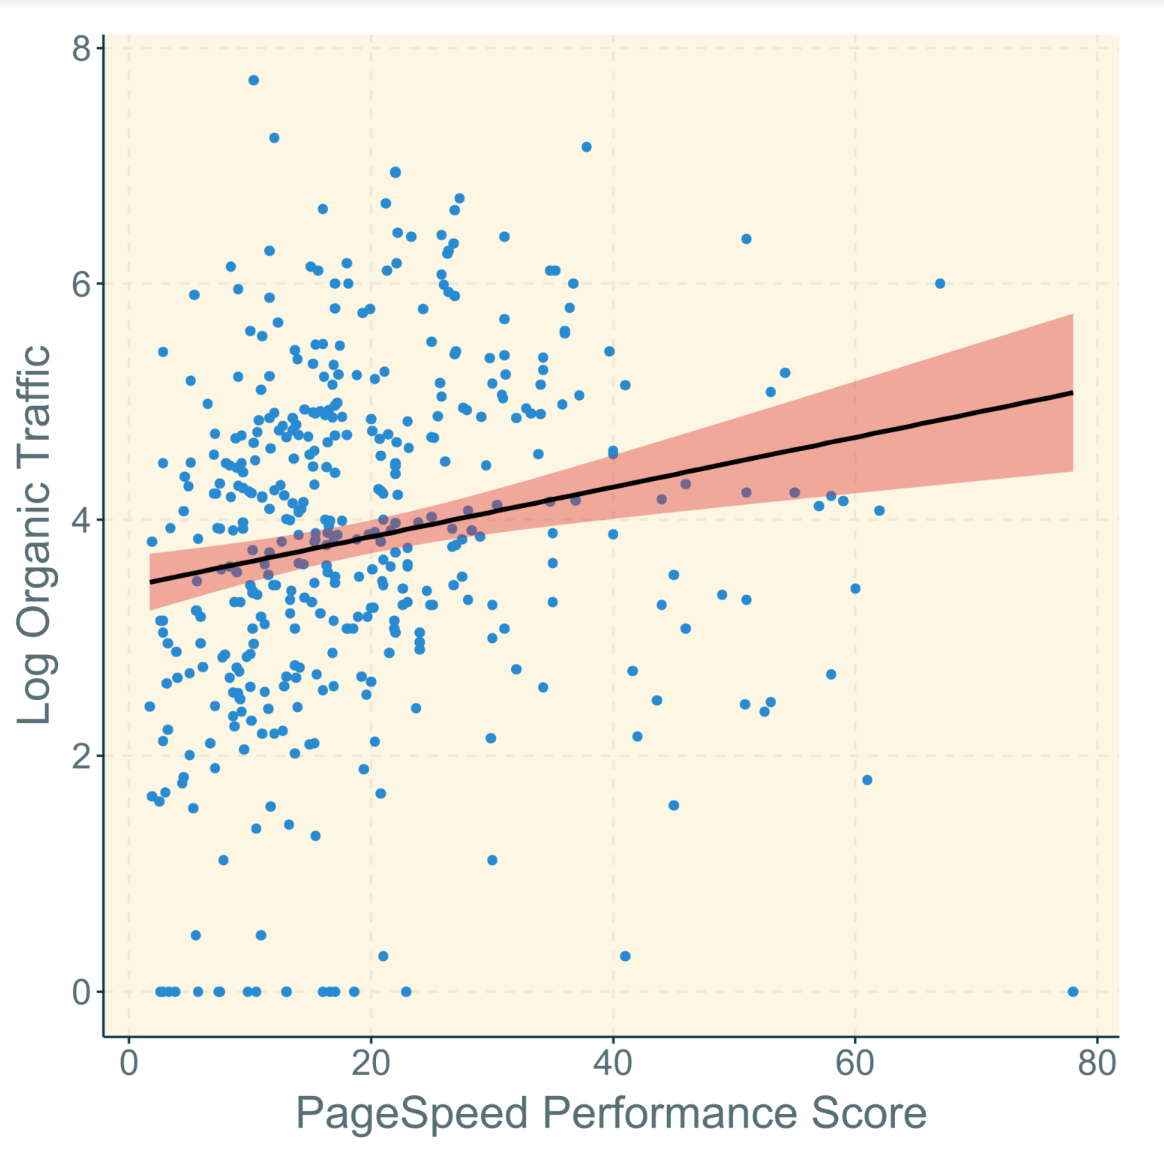 log organic traffic vs pagespeed performance score